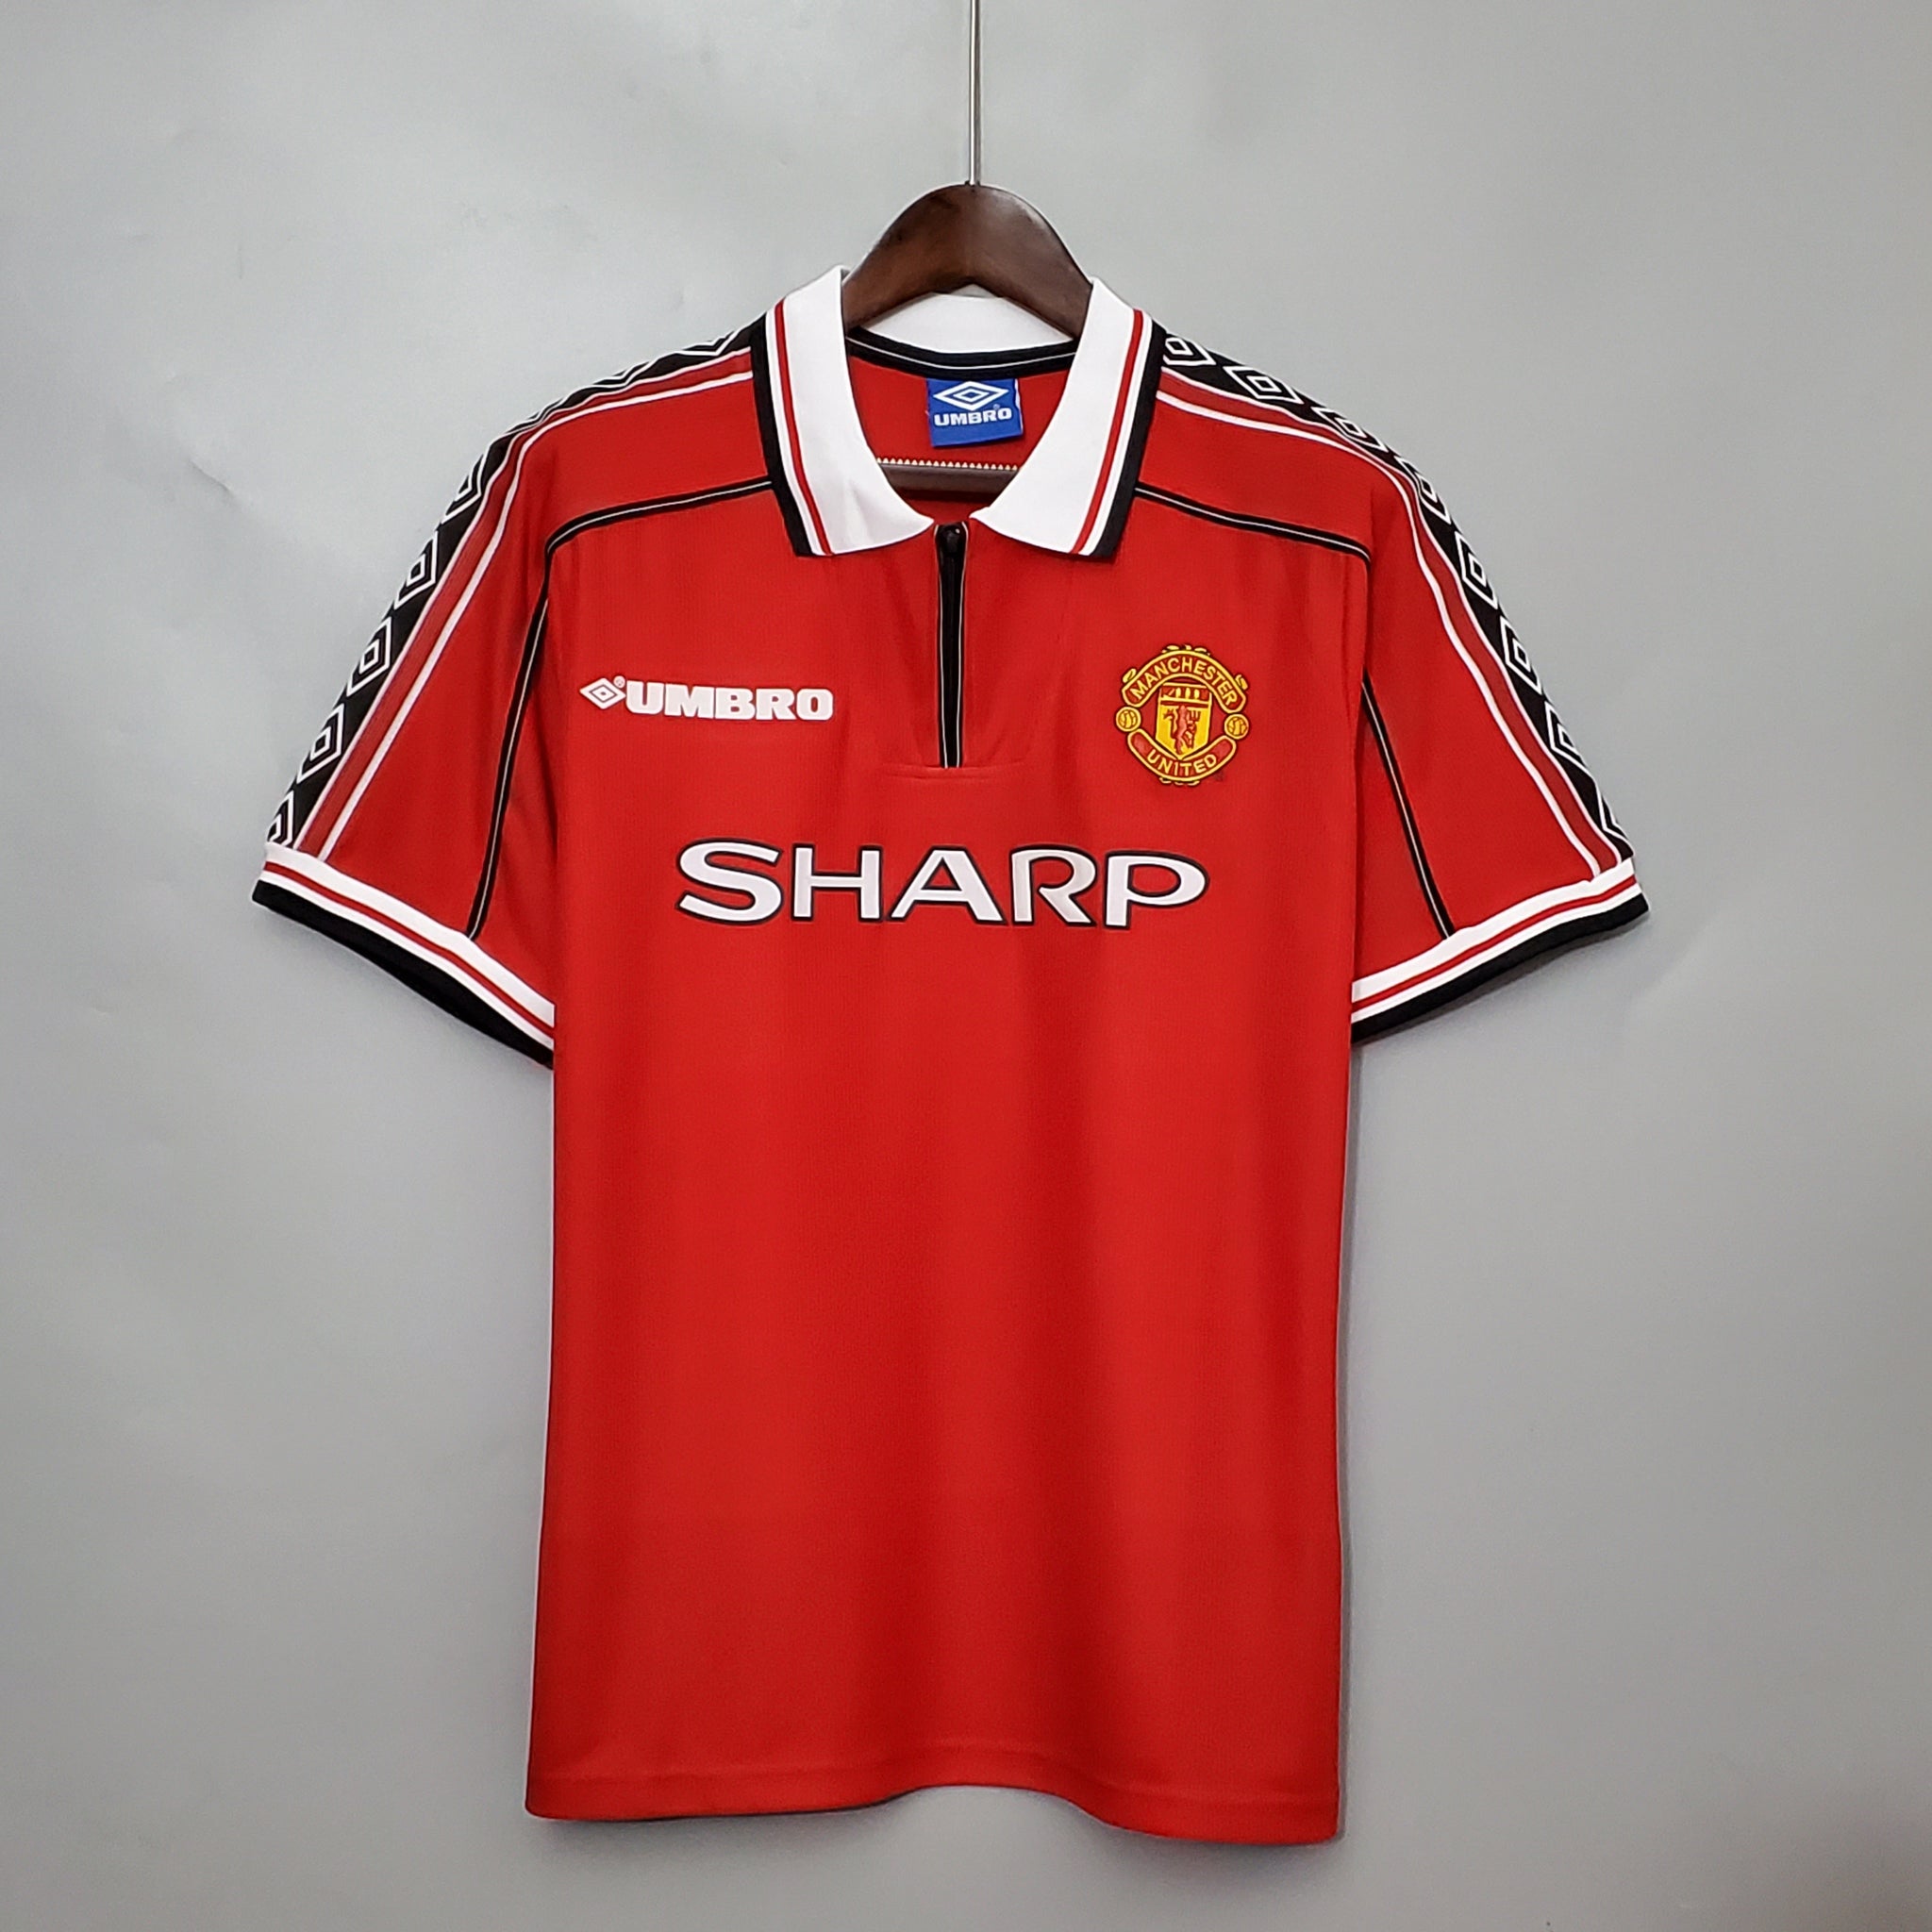 Manchester United Retro Shirts - Classic Shirt Find